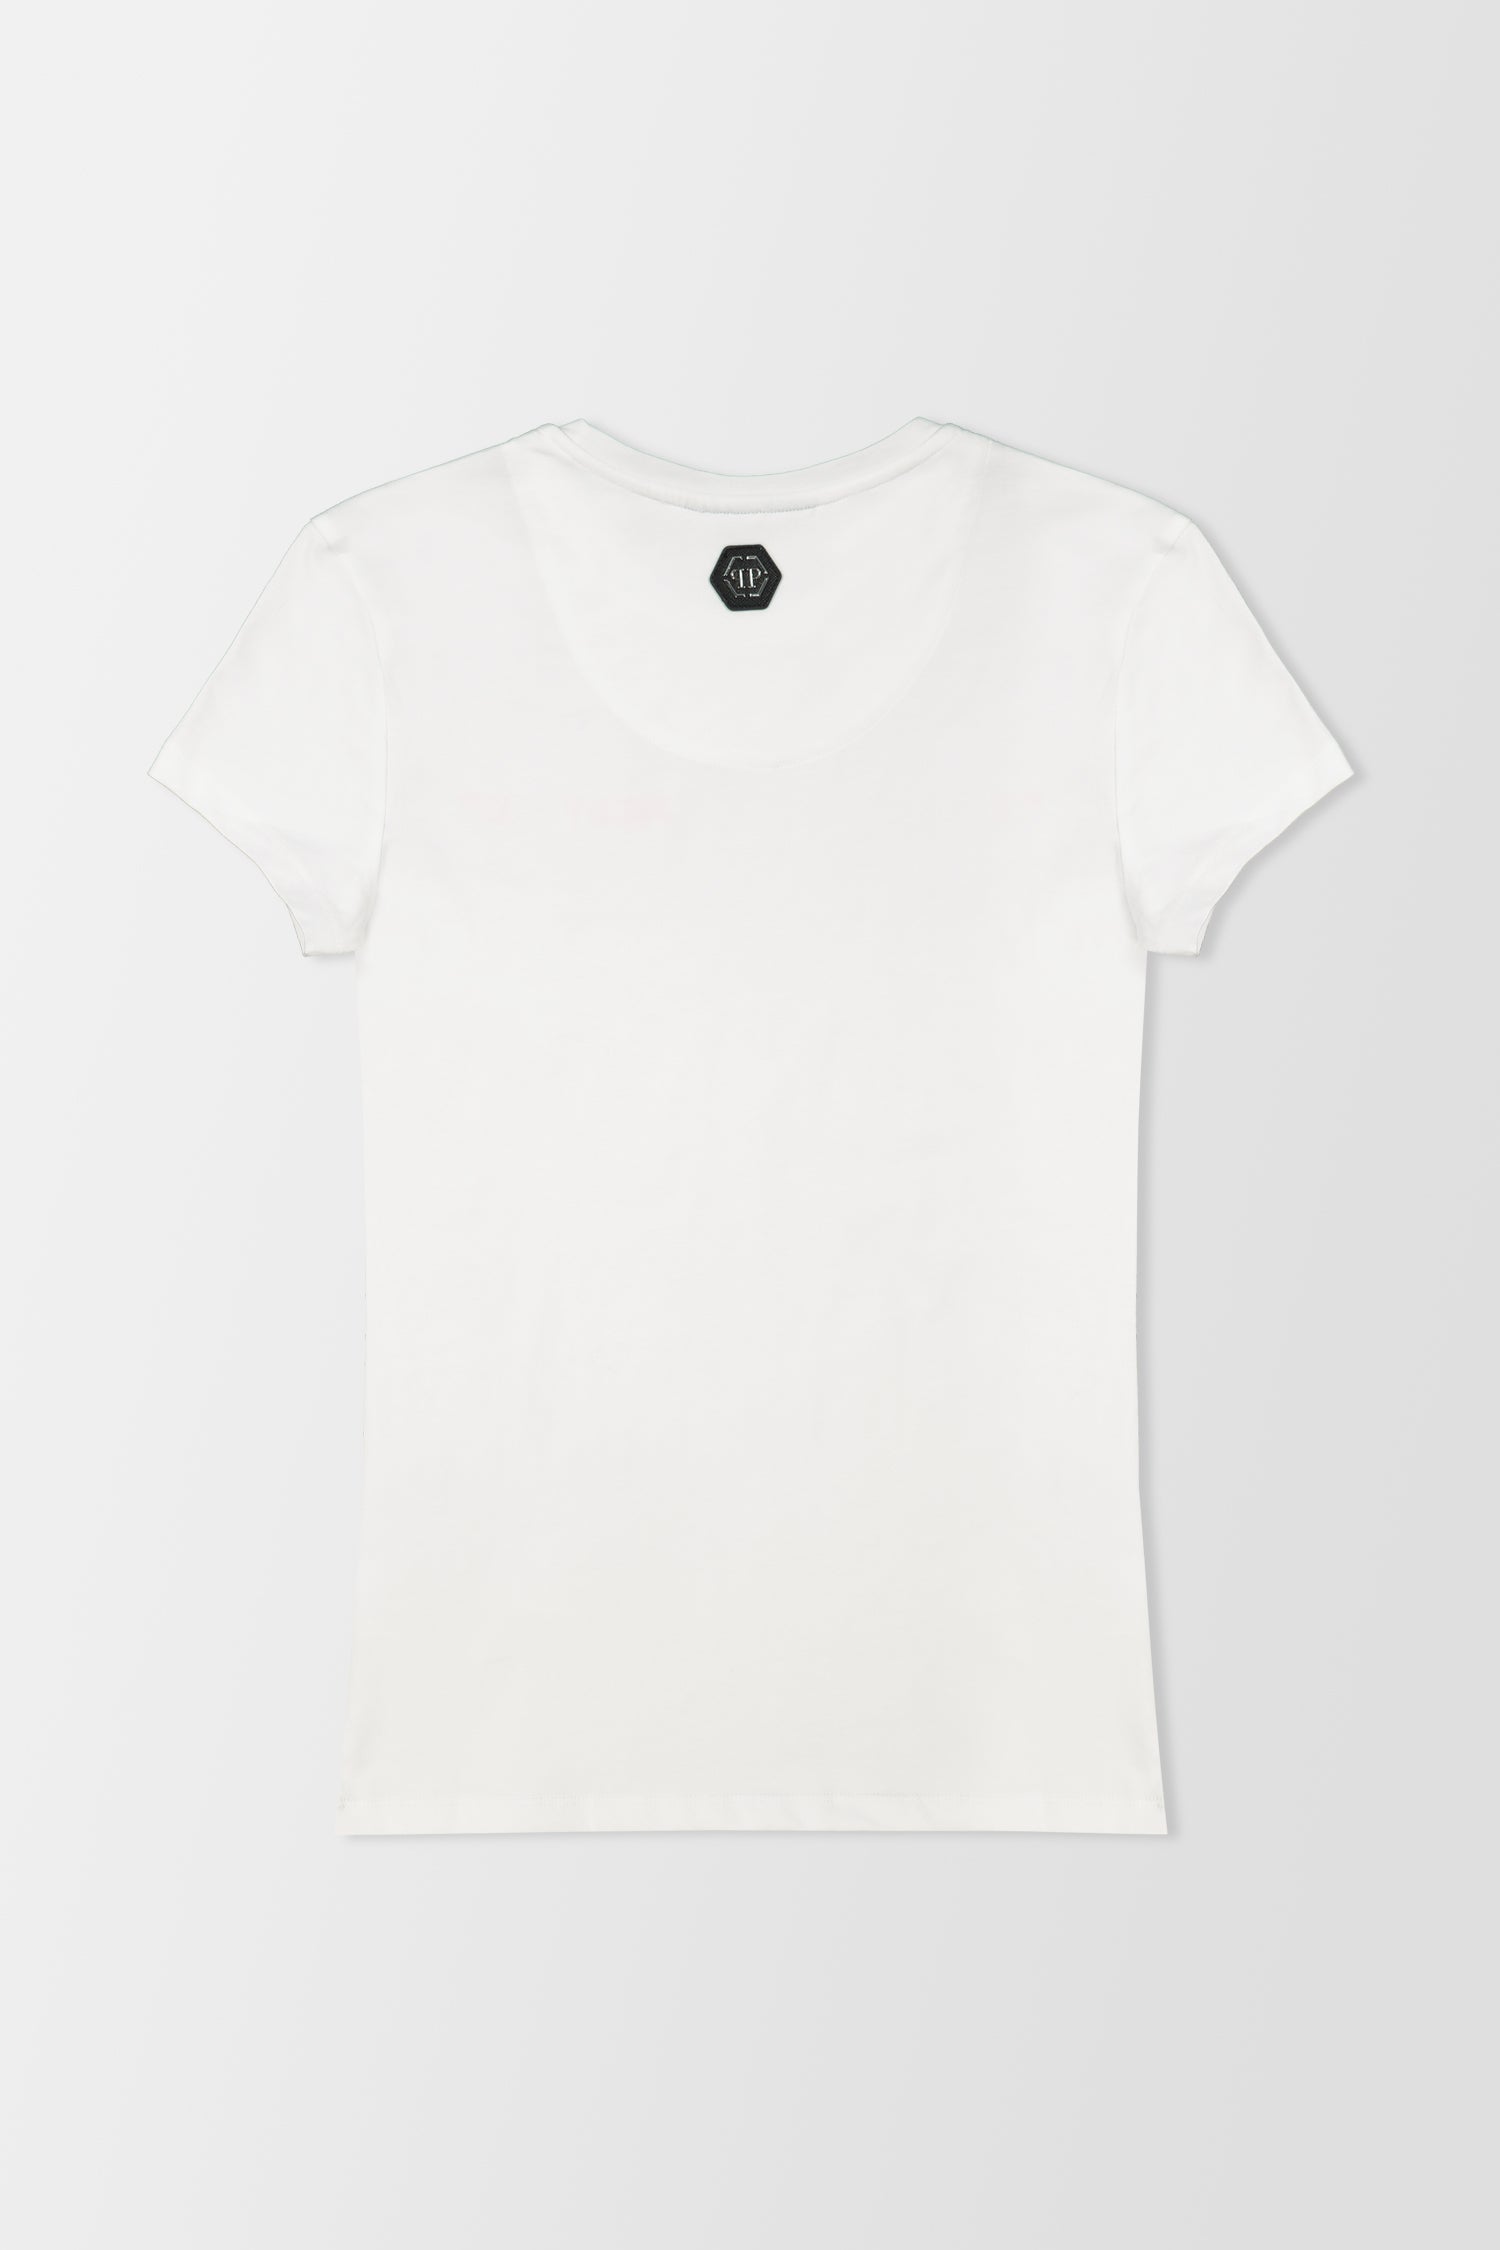 Philipp Plein White Round Neck Plein T-Shirt